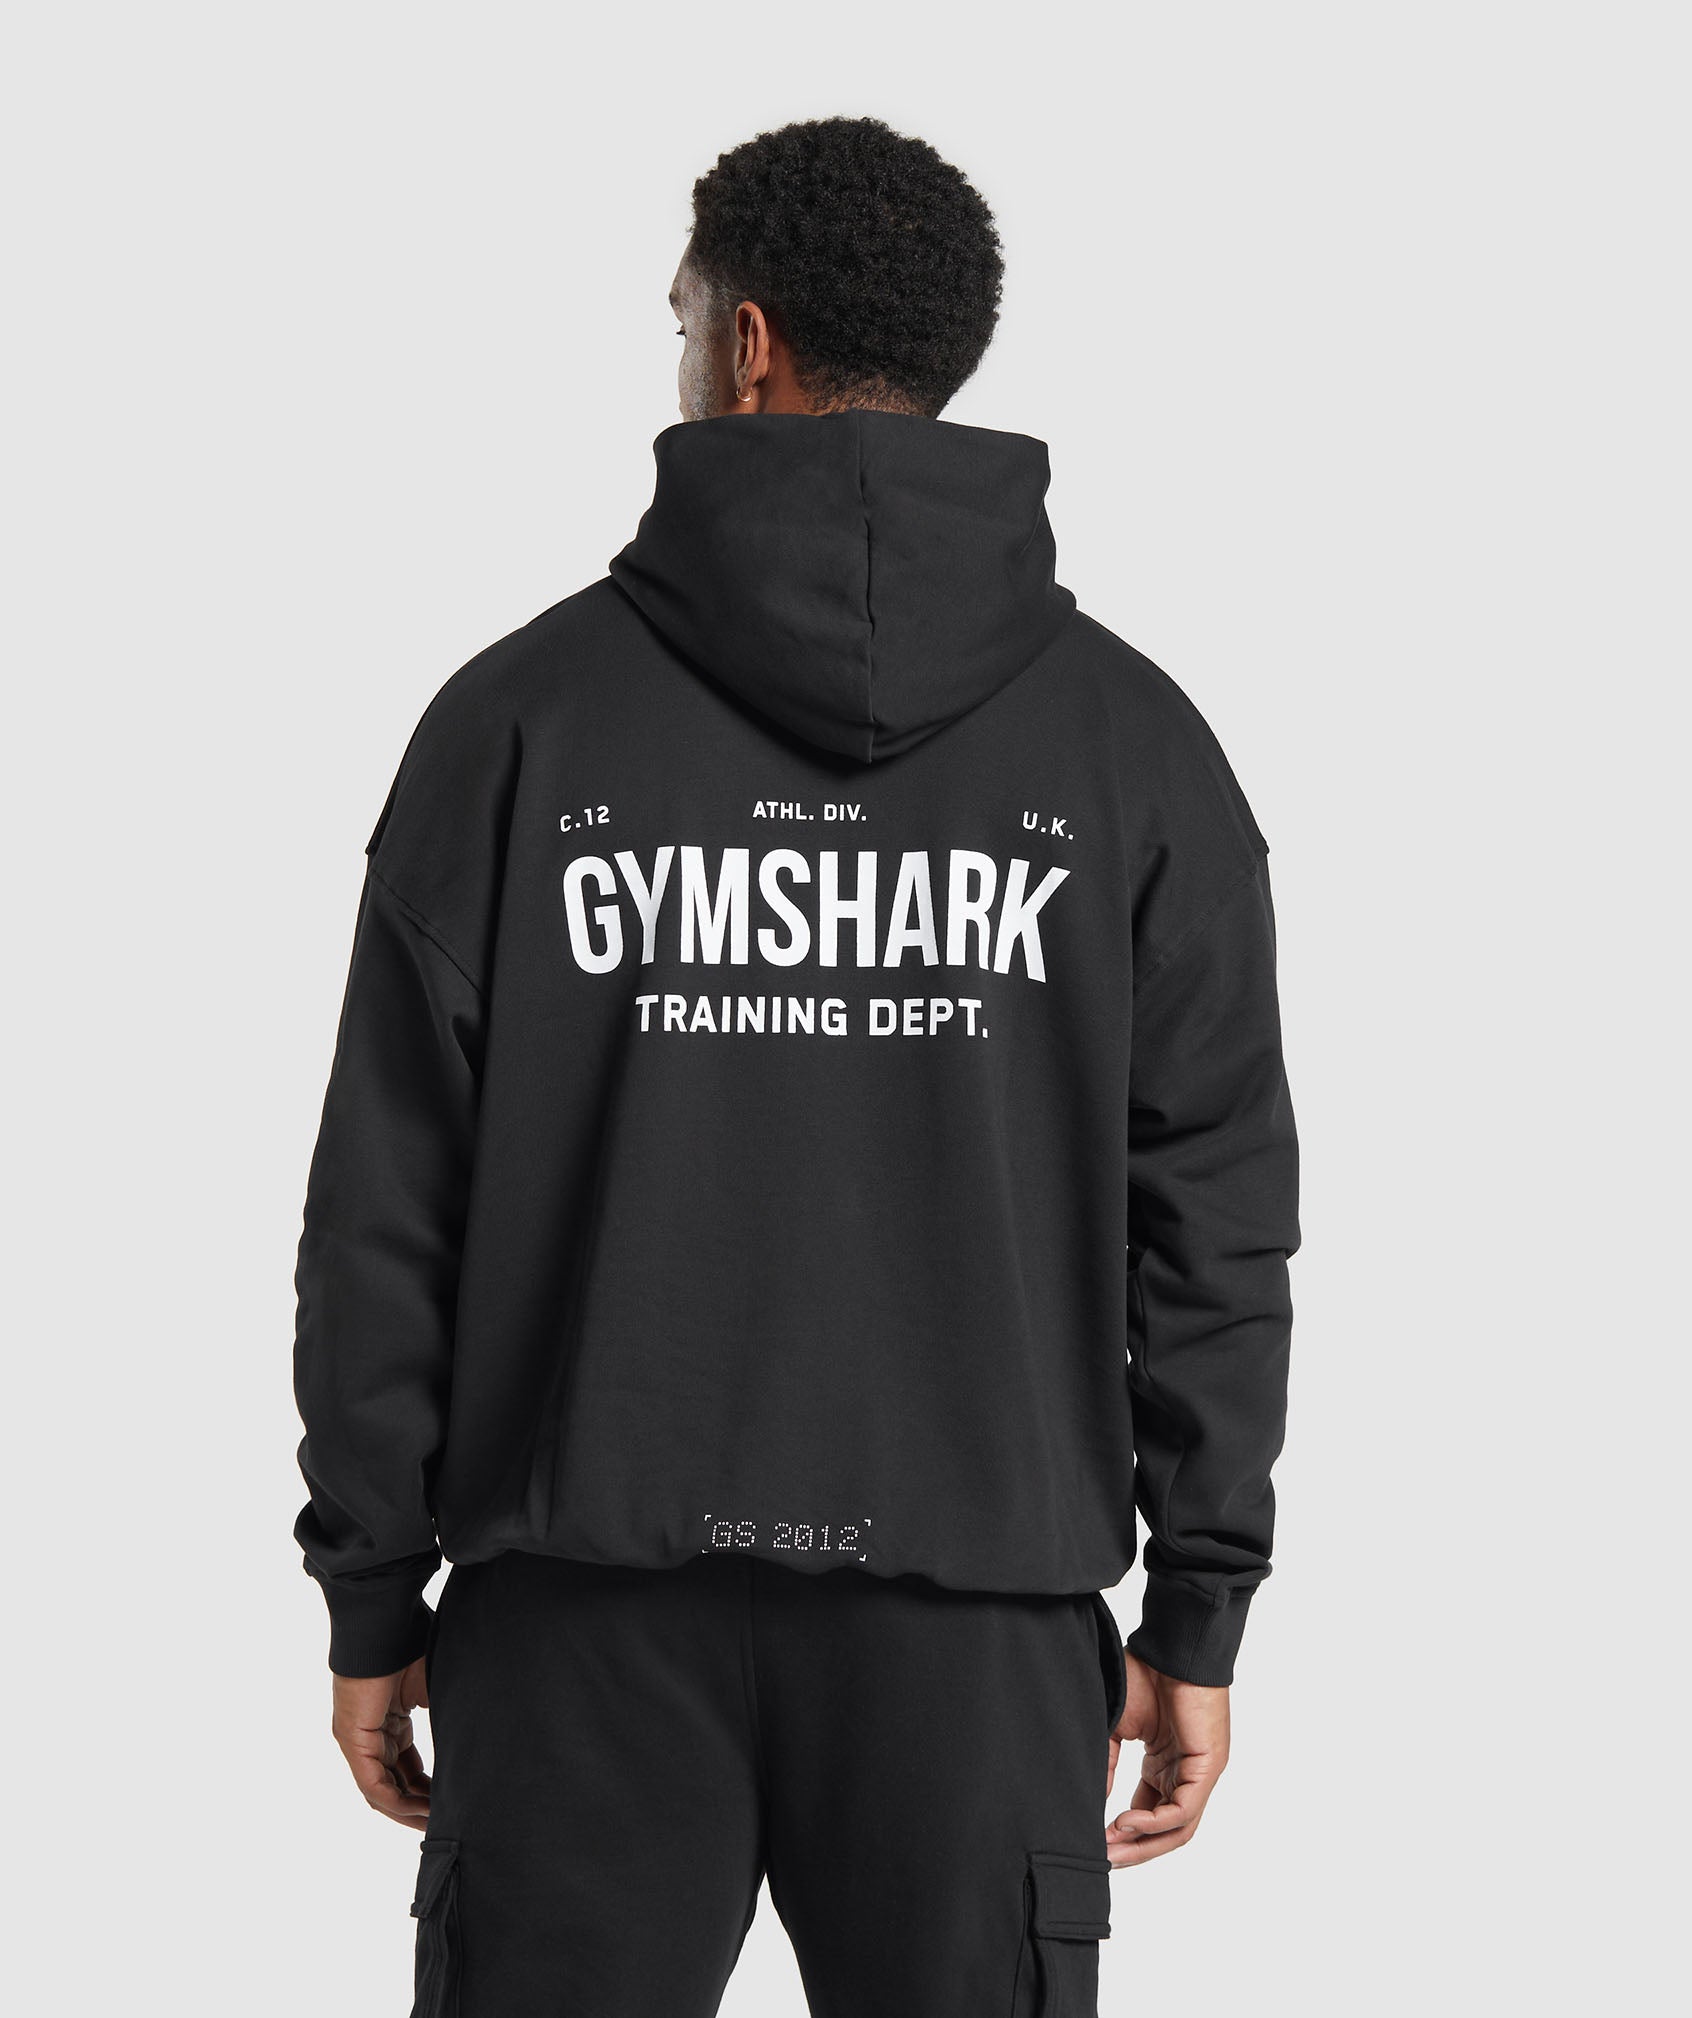 Gymshark Training Dept. Hoodie - Black | Gymshark